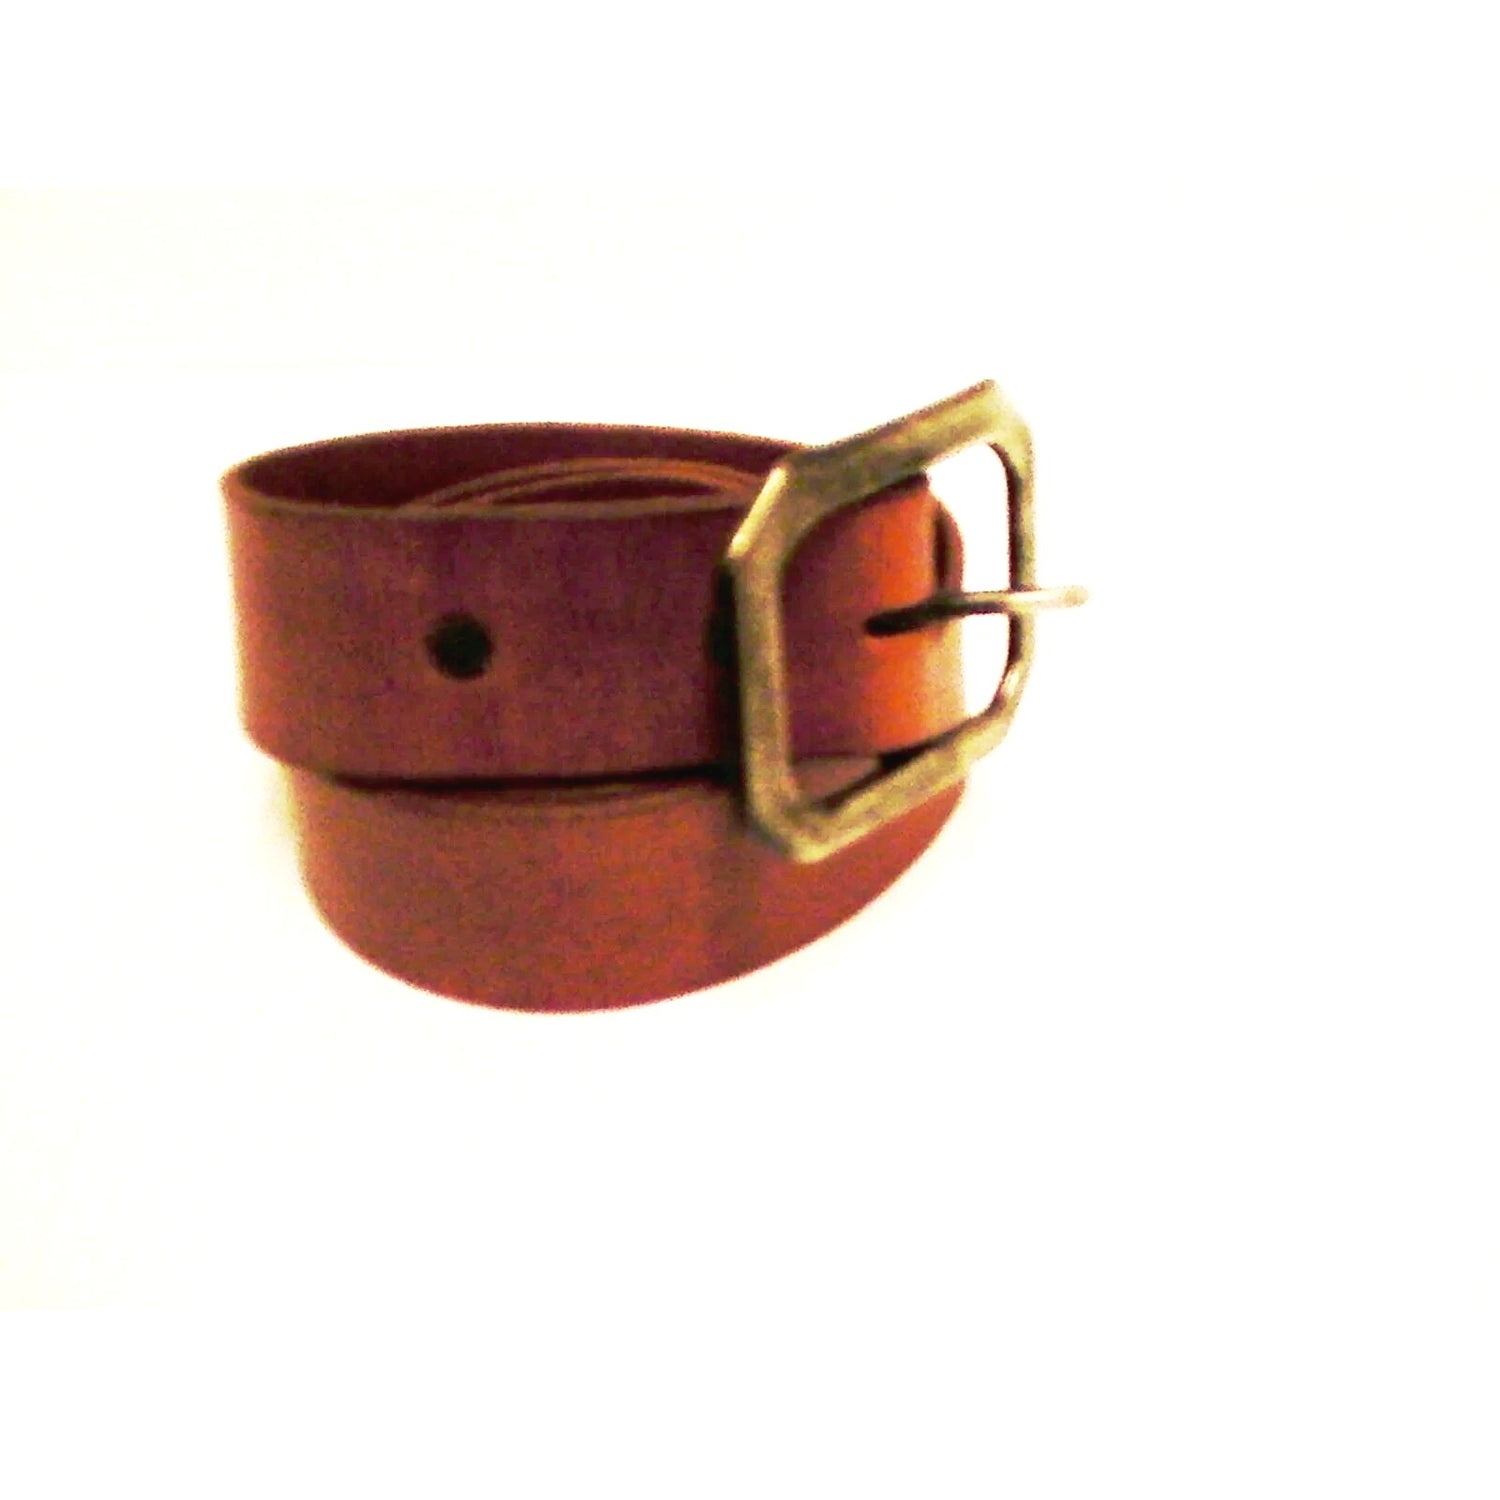 True religion belt genuine leather gunmetal buckle size 28 inch tan color new